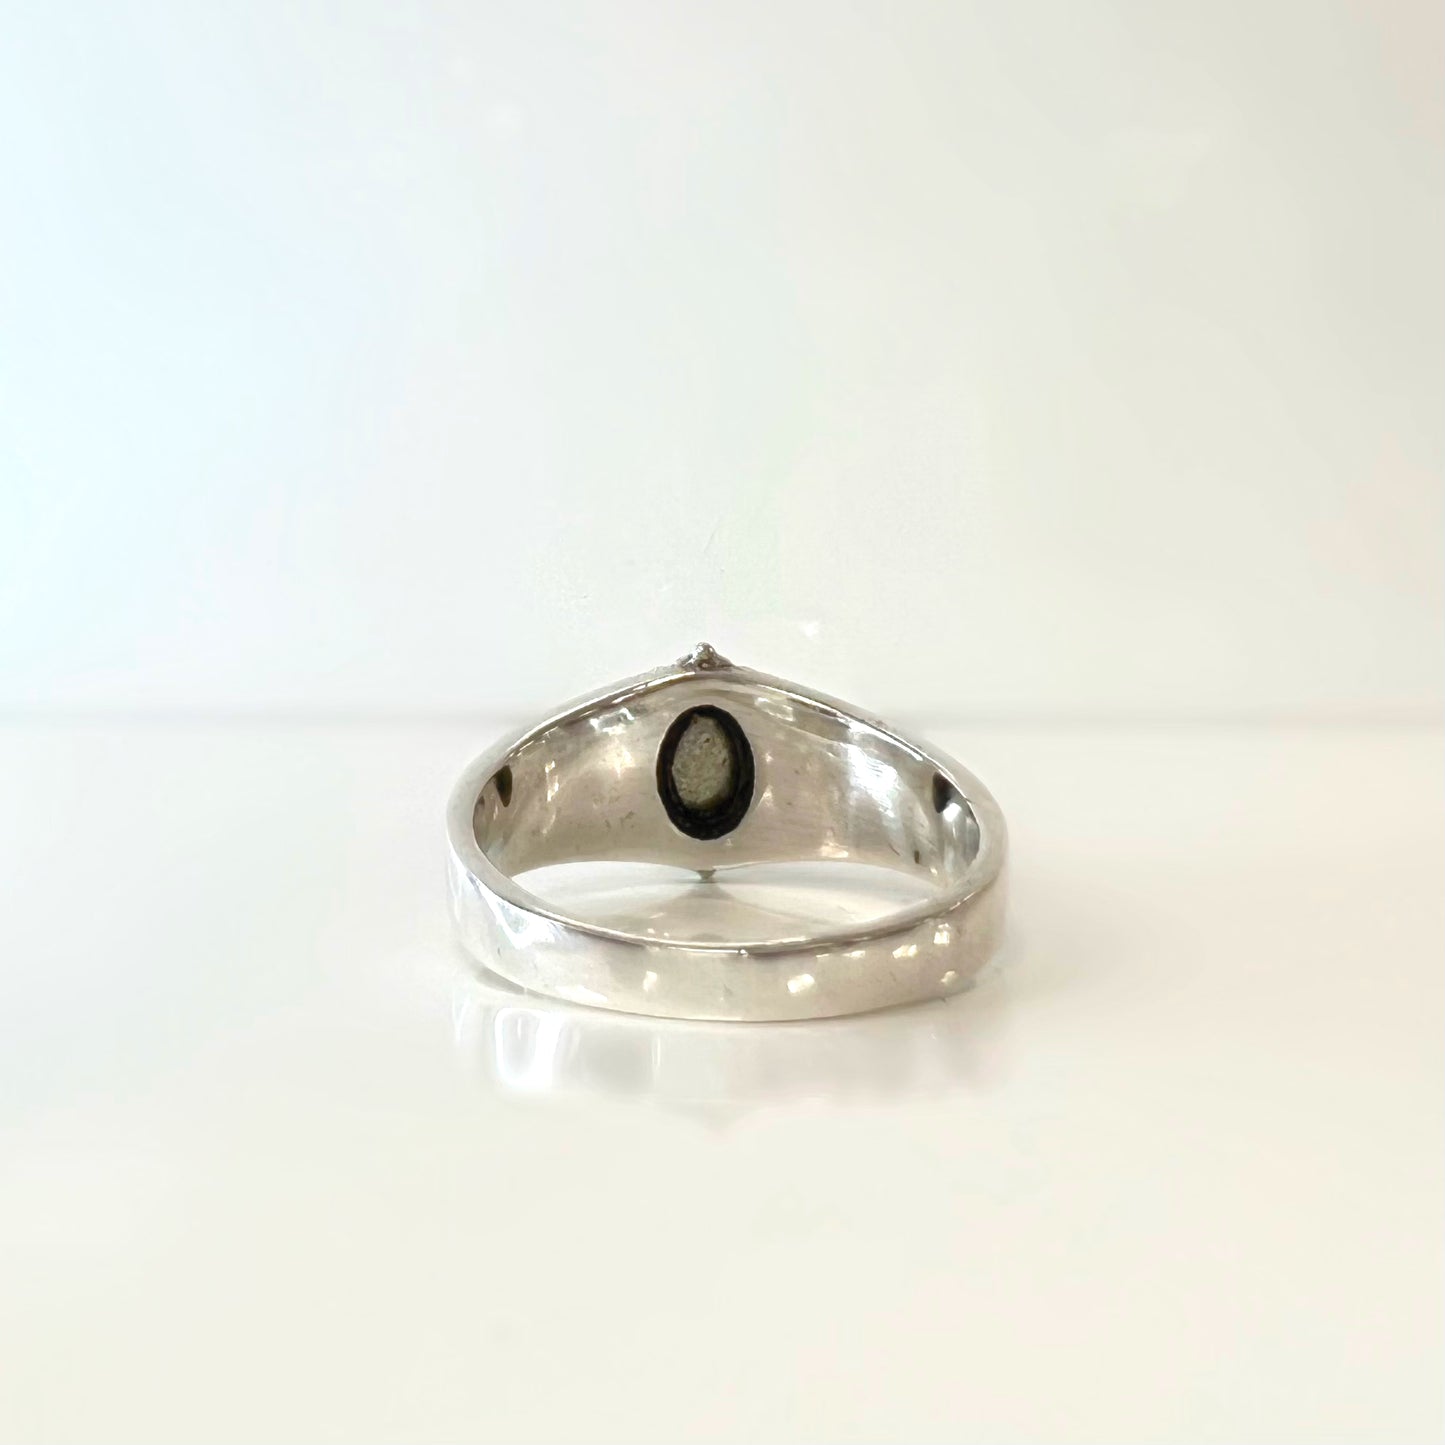 Sterling Silver Bohemian Oval Cut Labradorite Ring - Size N 1/2